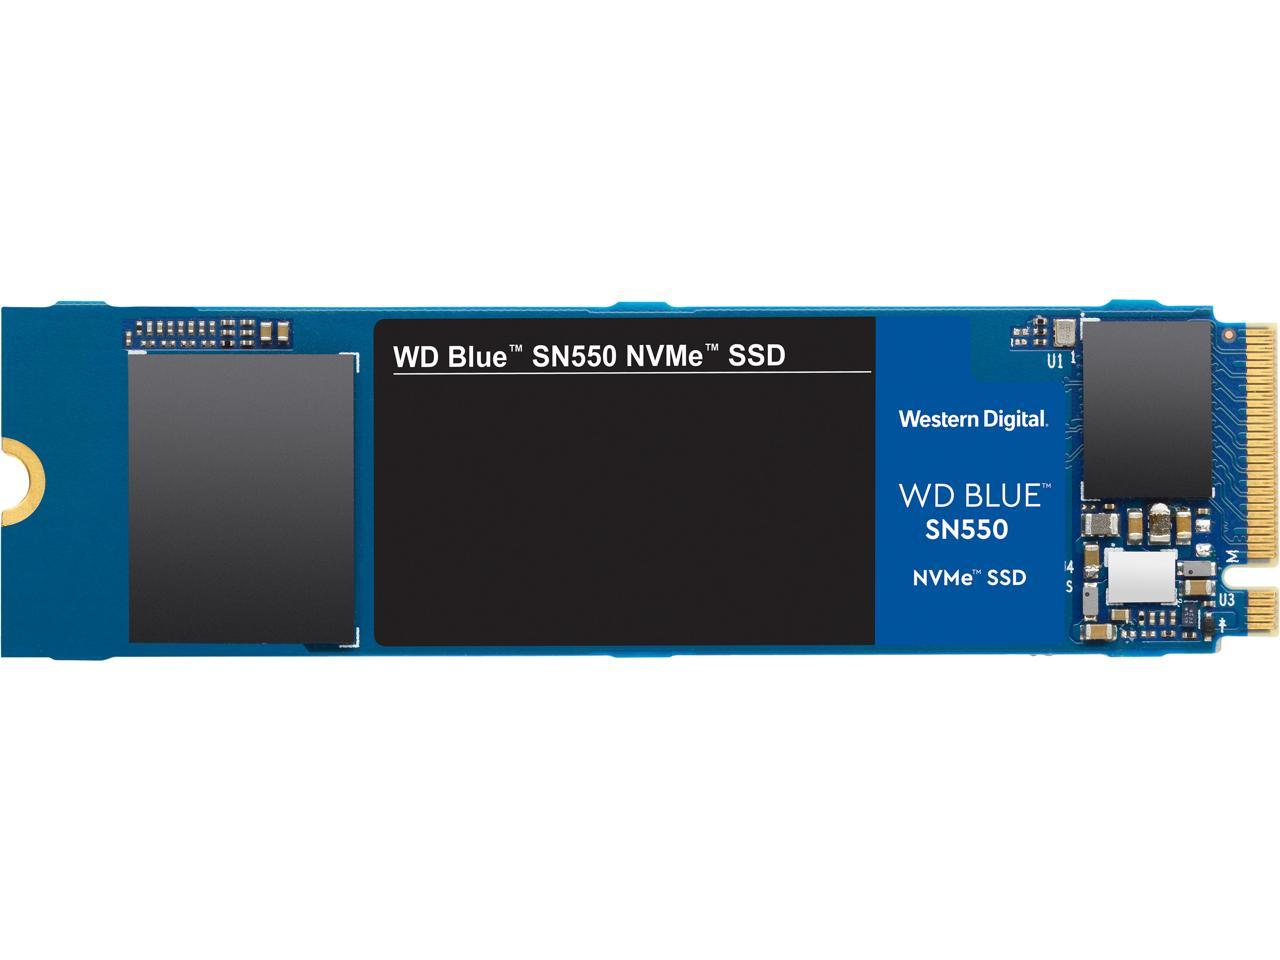 500GB SN550, Western Digital WD Blue, NVMe Internal SSD for $49.99